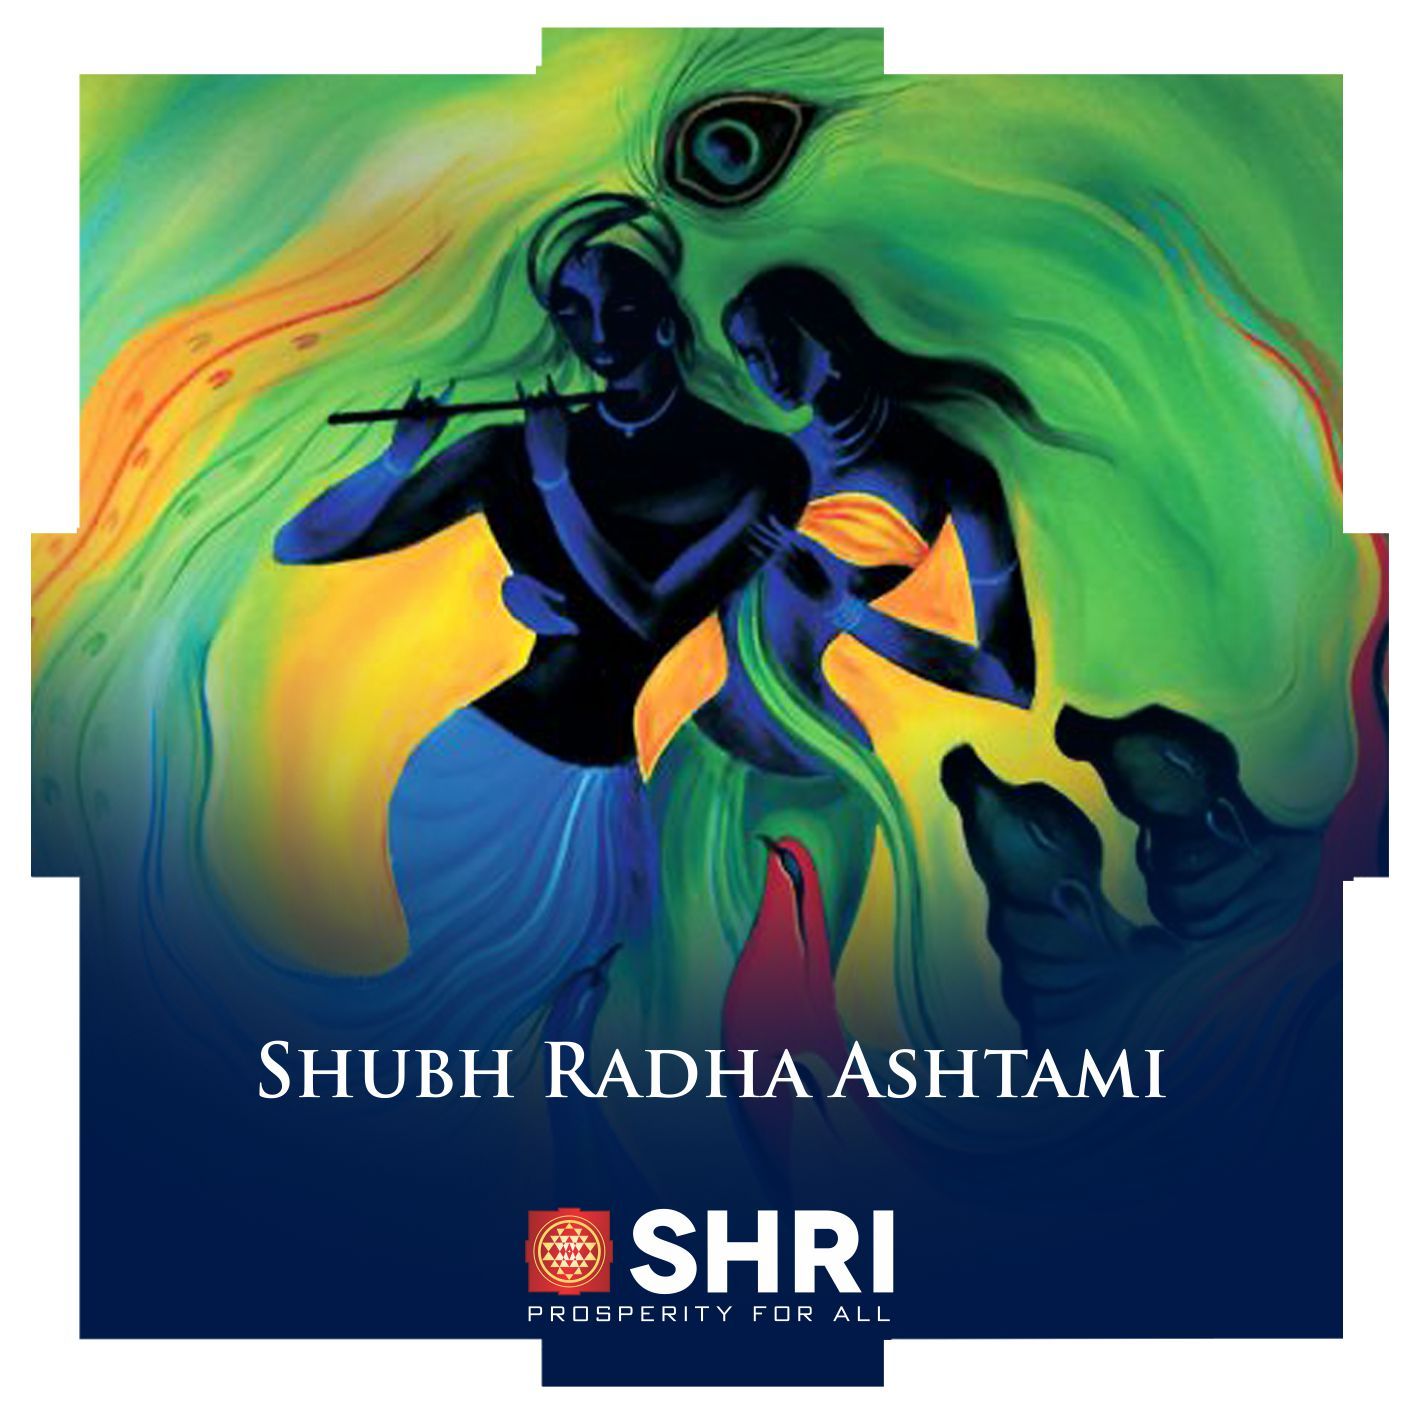 SUBH RADHA ASHTAMI May this Radha Ashtami the Appearance Day